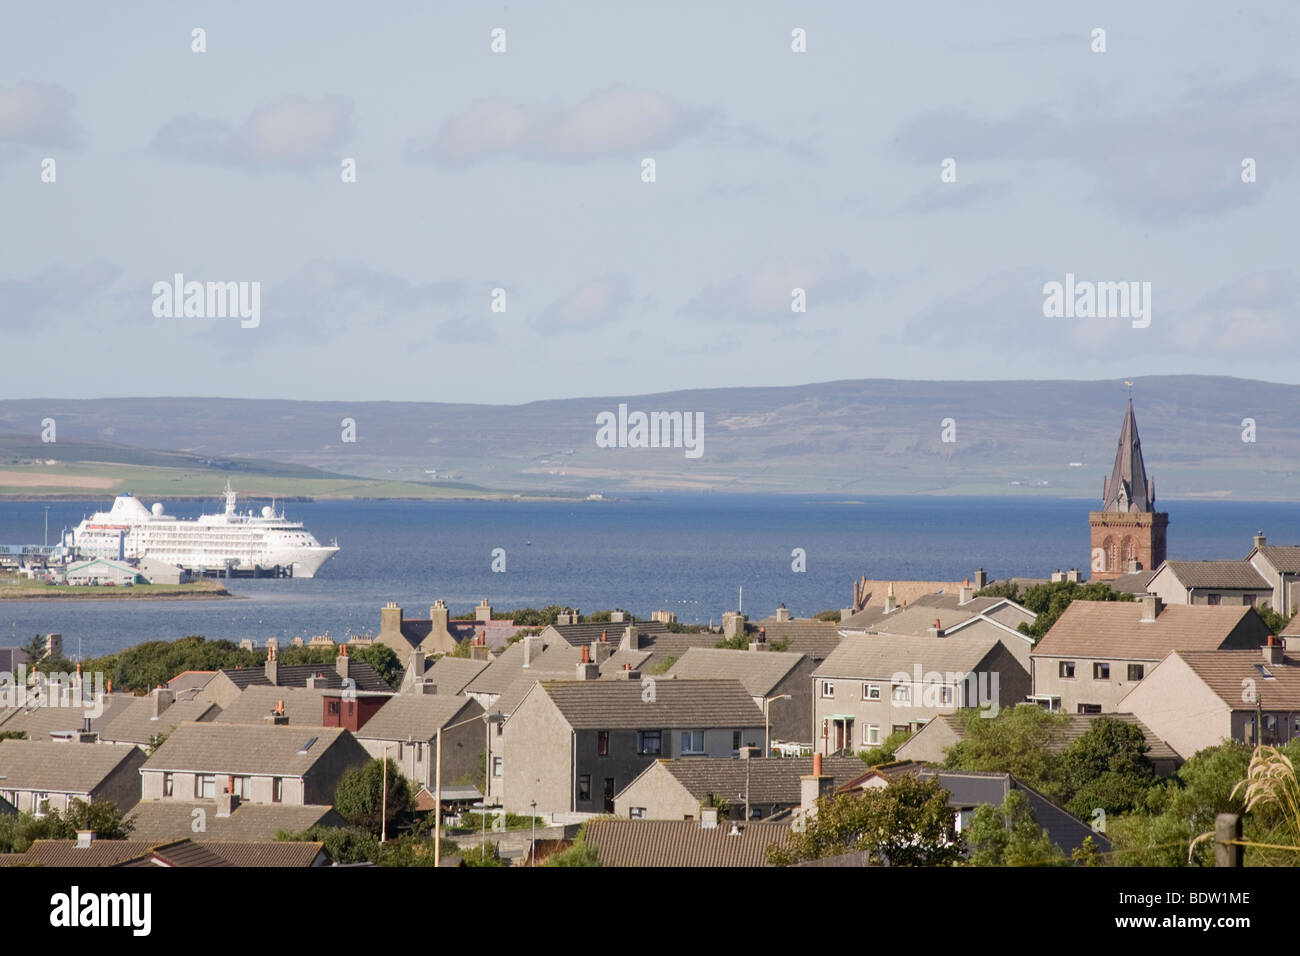 Vista de Kirkwall, Hauptstadt der inseln de Orkney, capital de las islas Orkney, Escocia, schottland Foto de stock